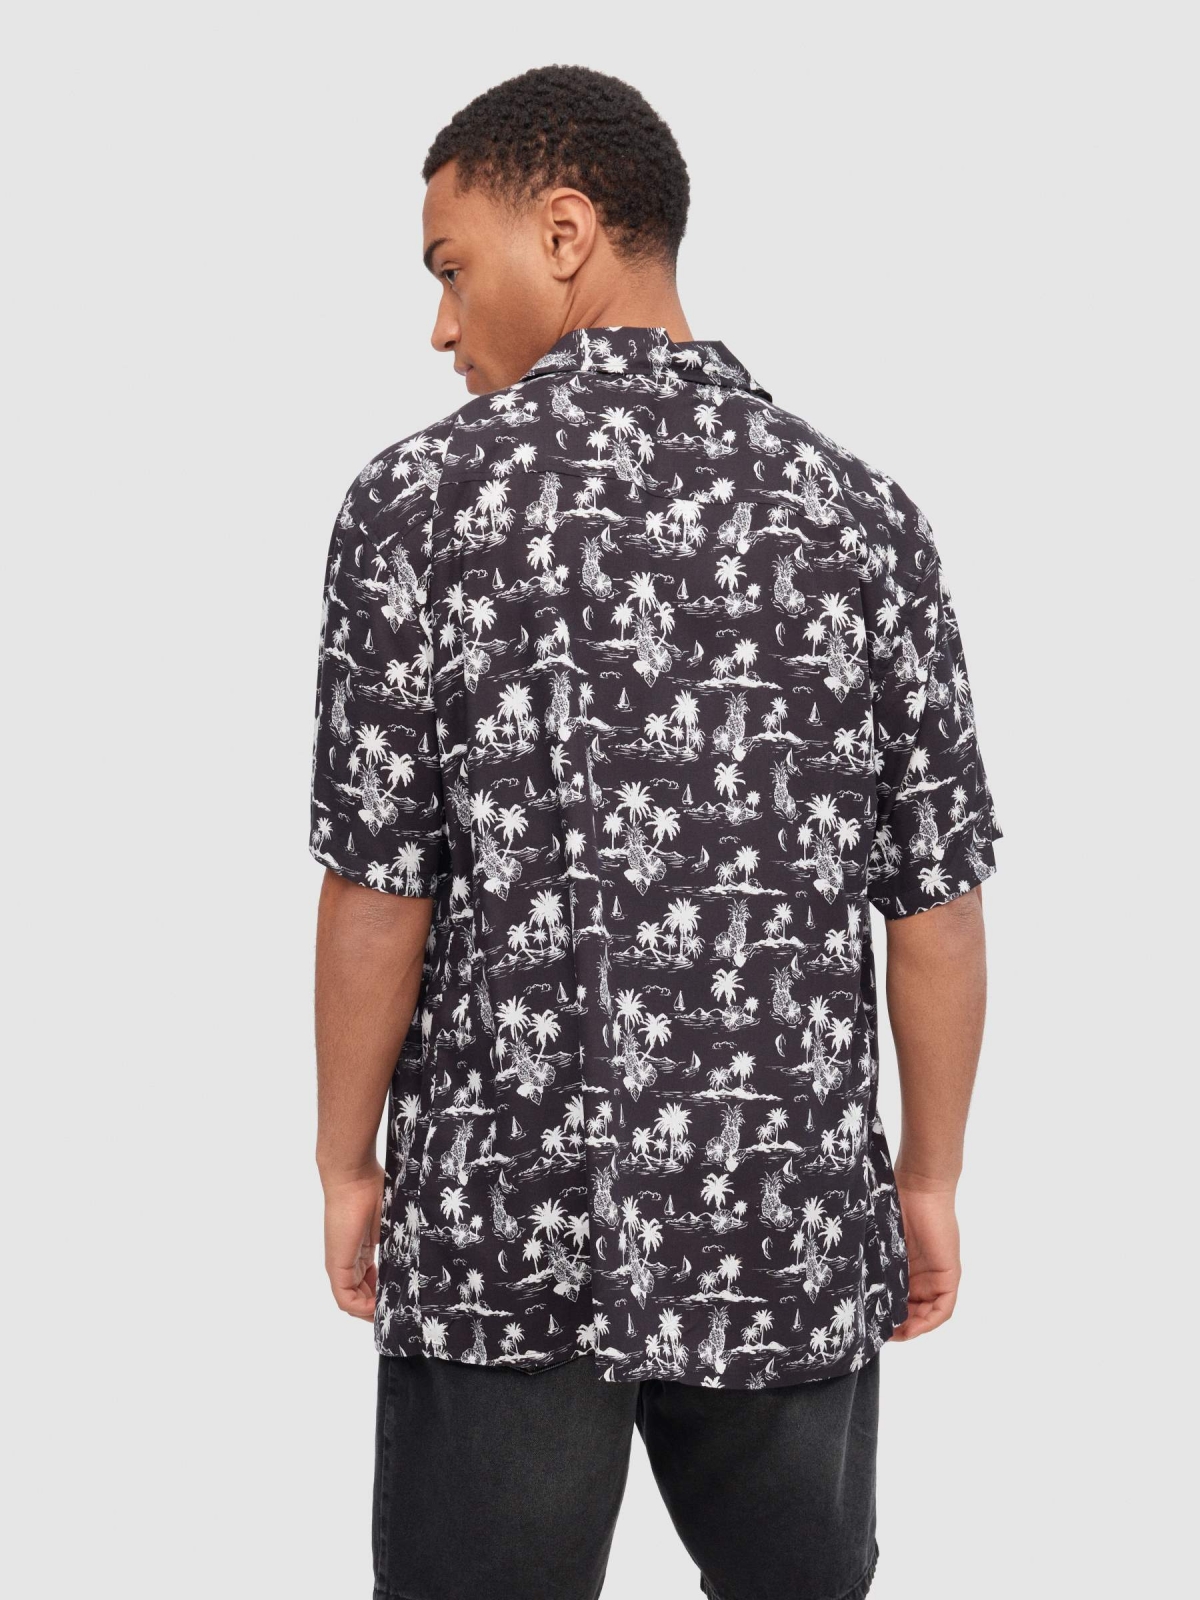 Hawaiian shirt black middle back view